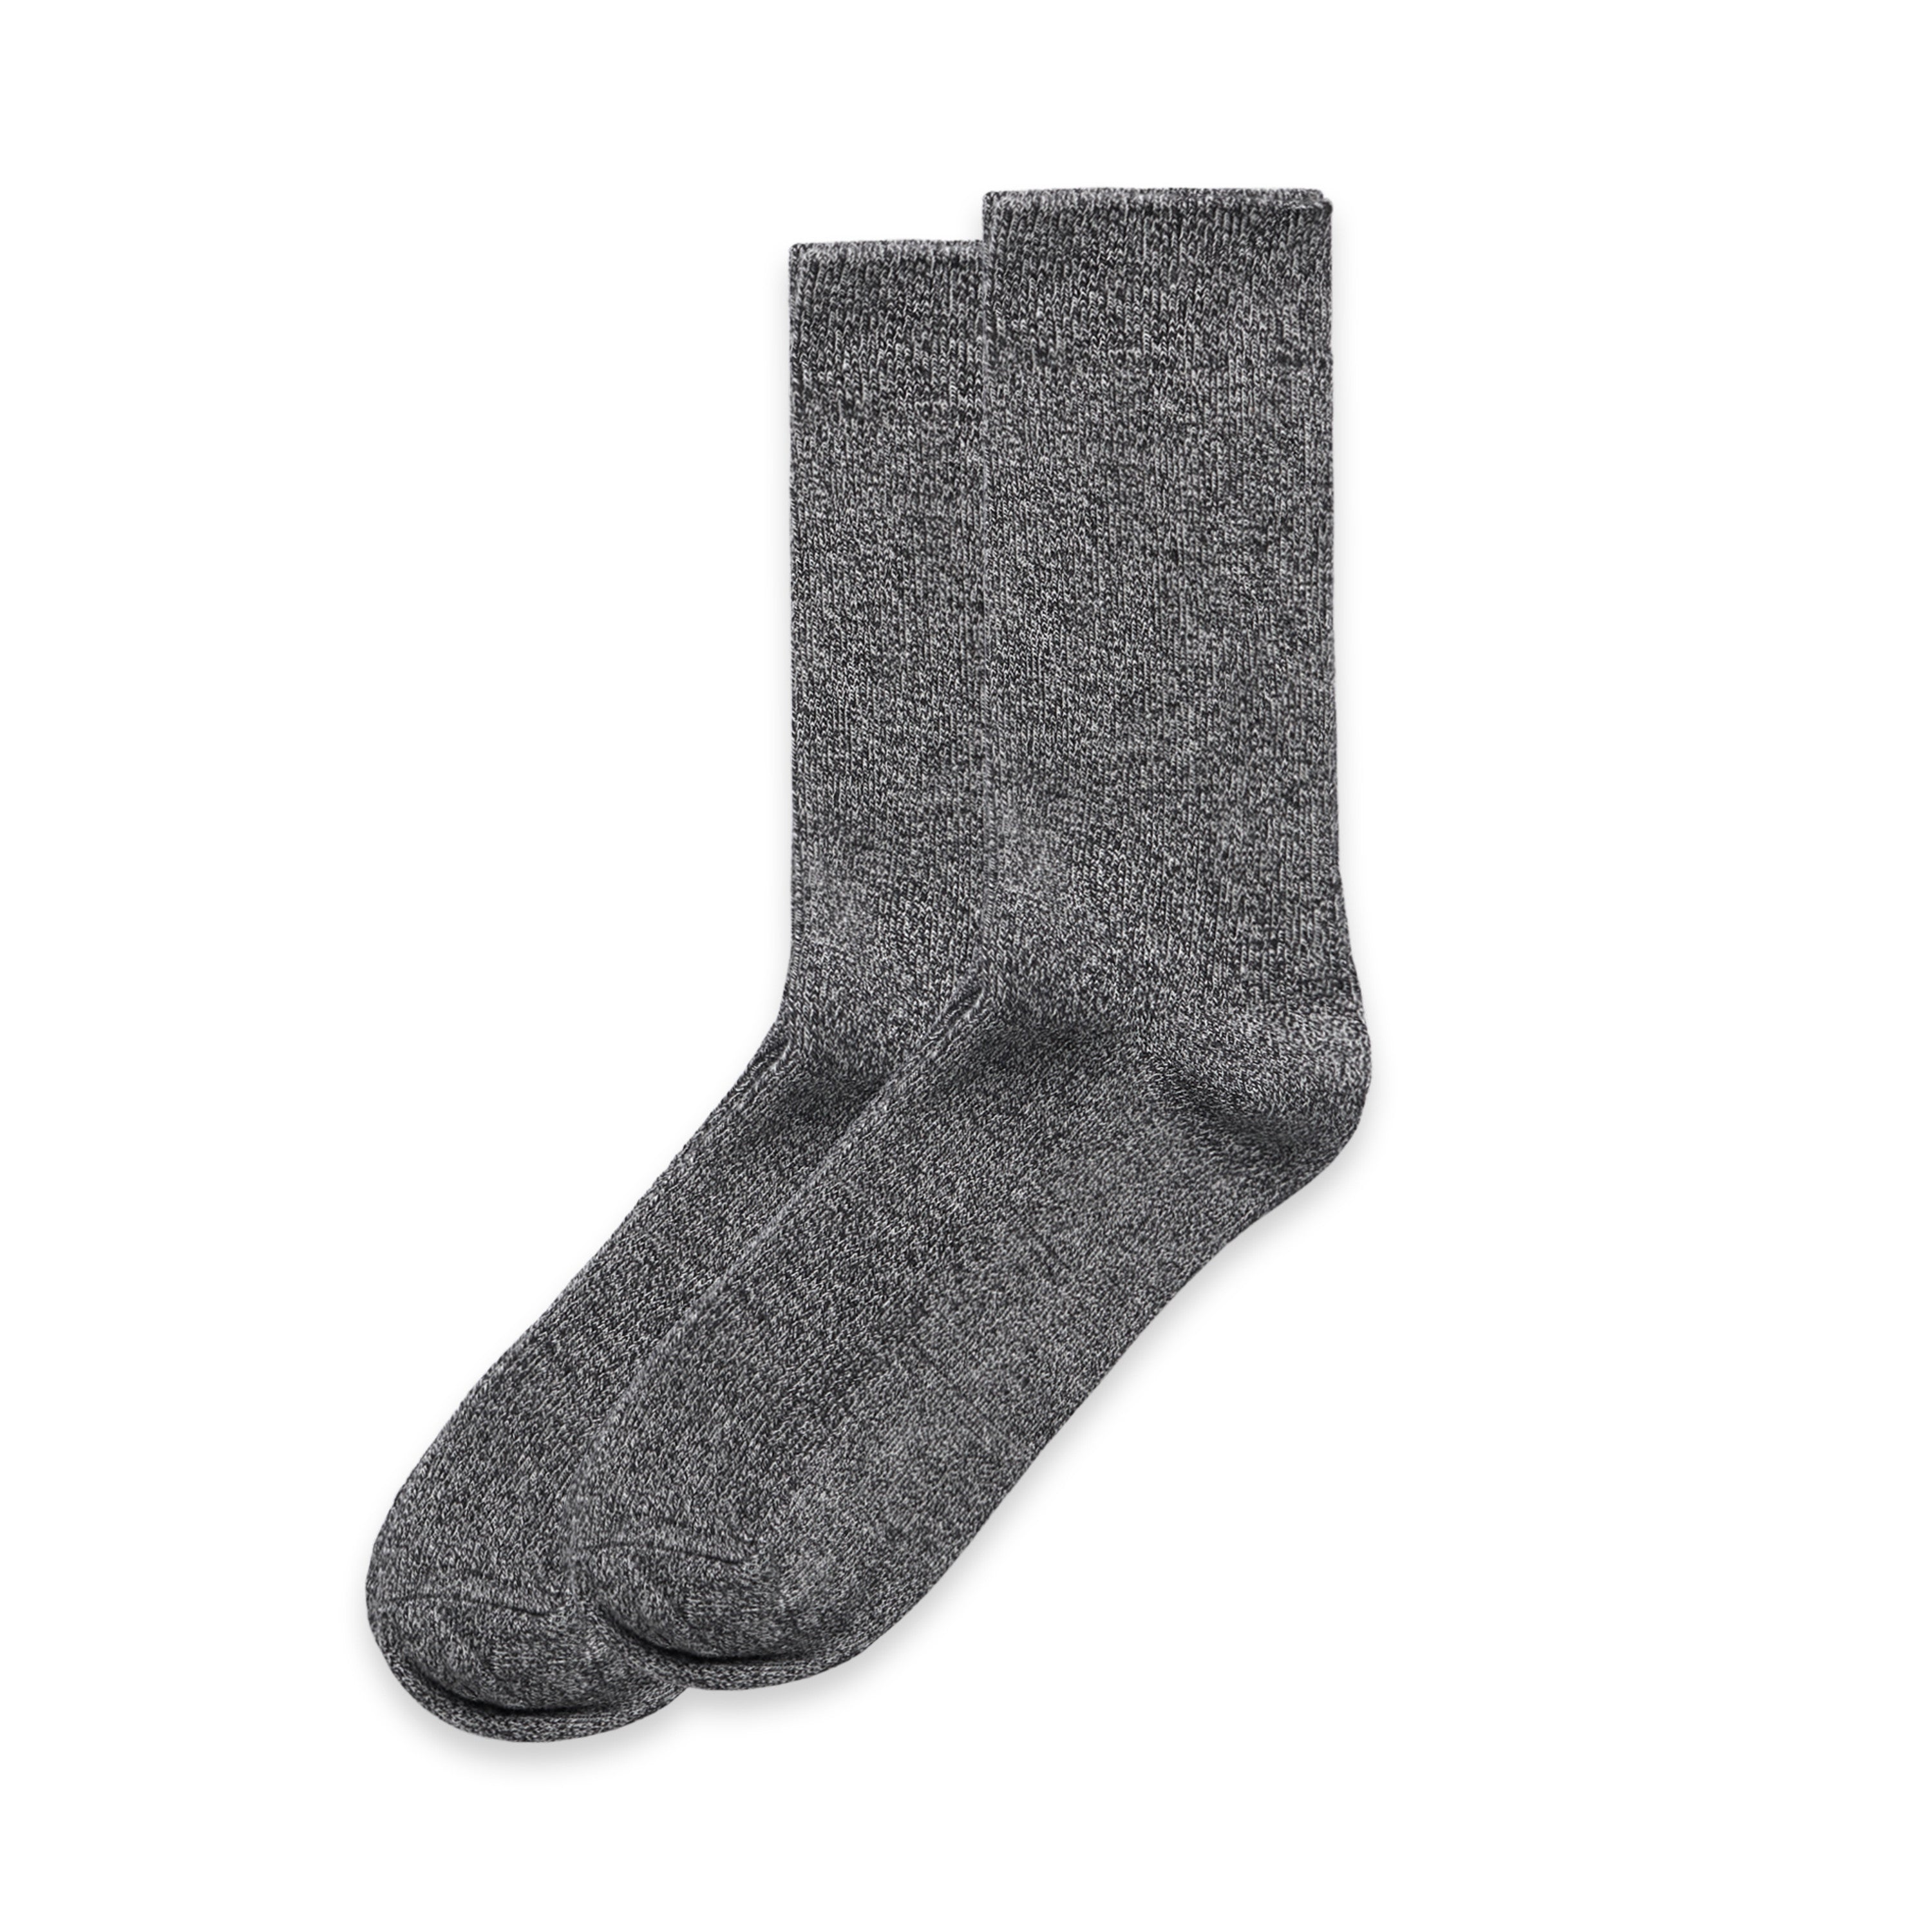 AS Colour 1205 Marle Socks (2pk) 'Black Heather'